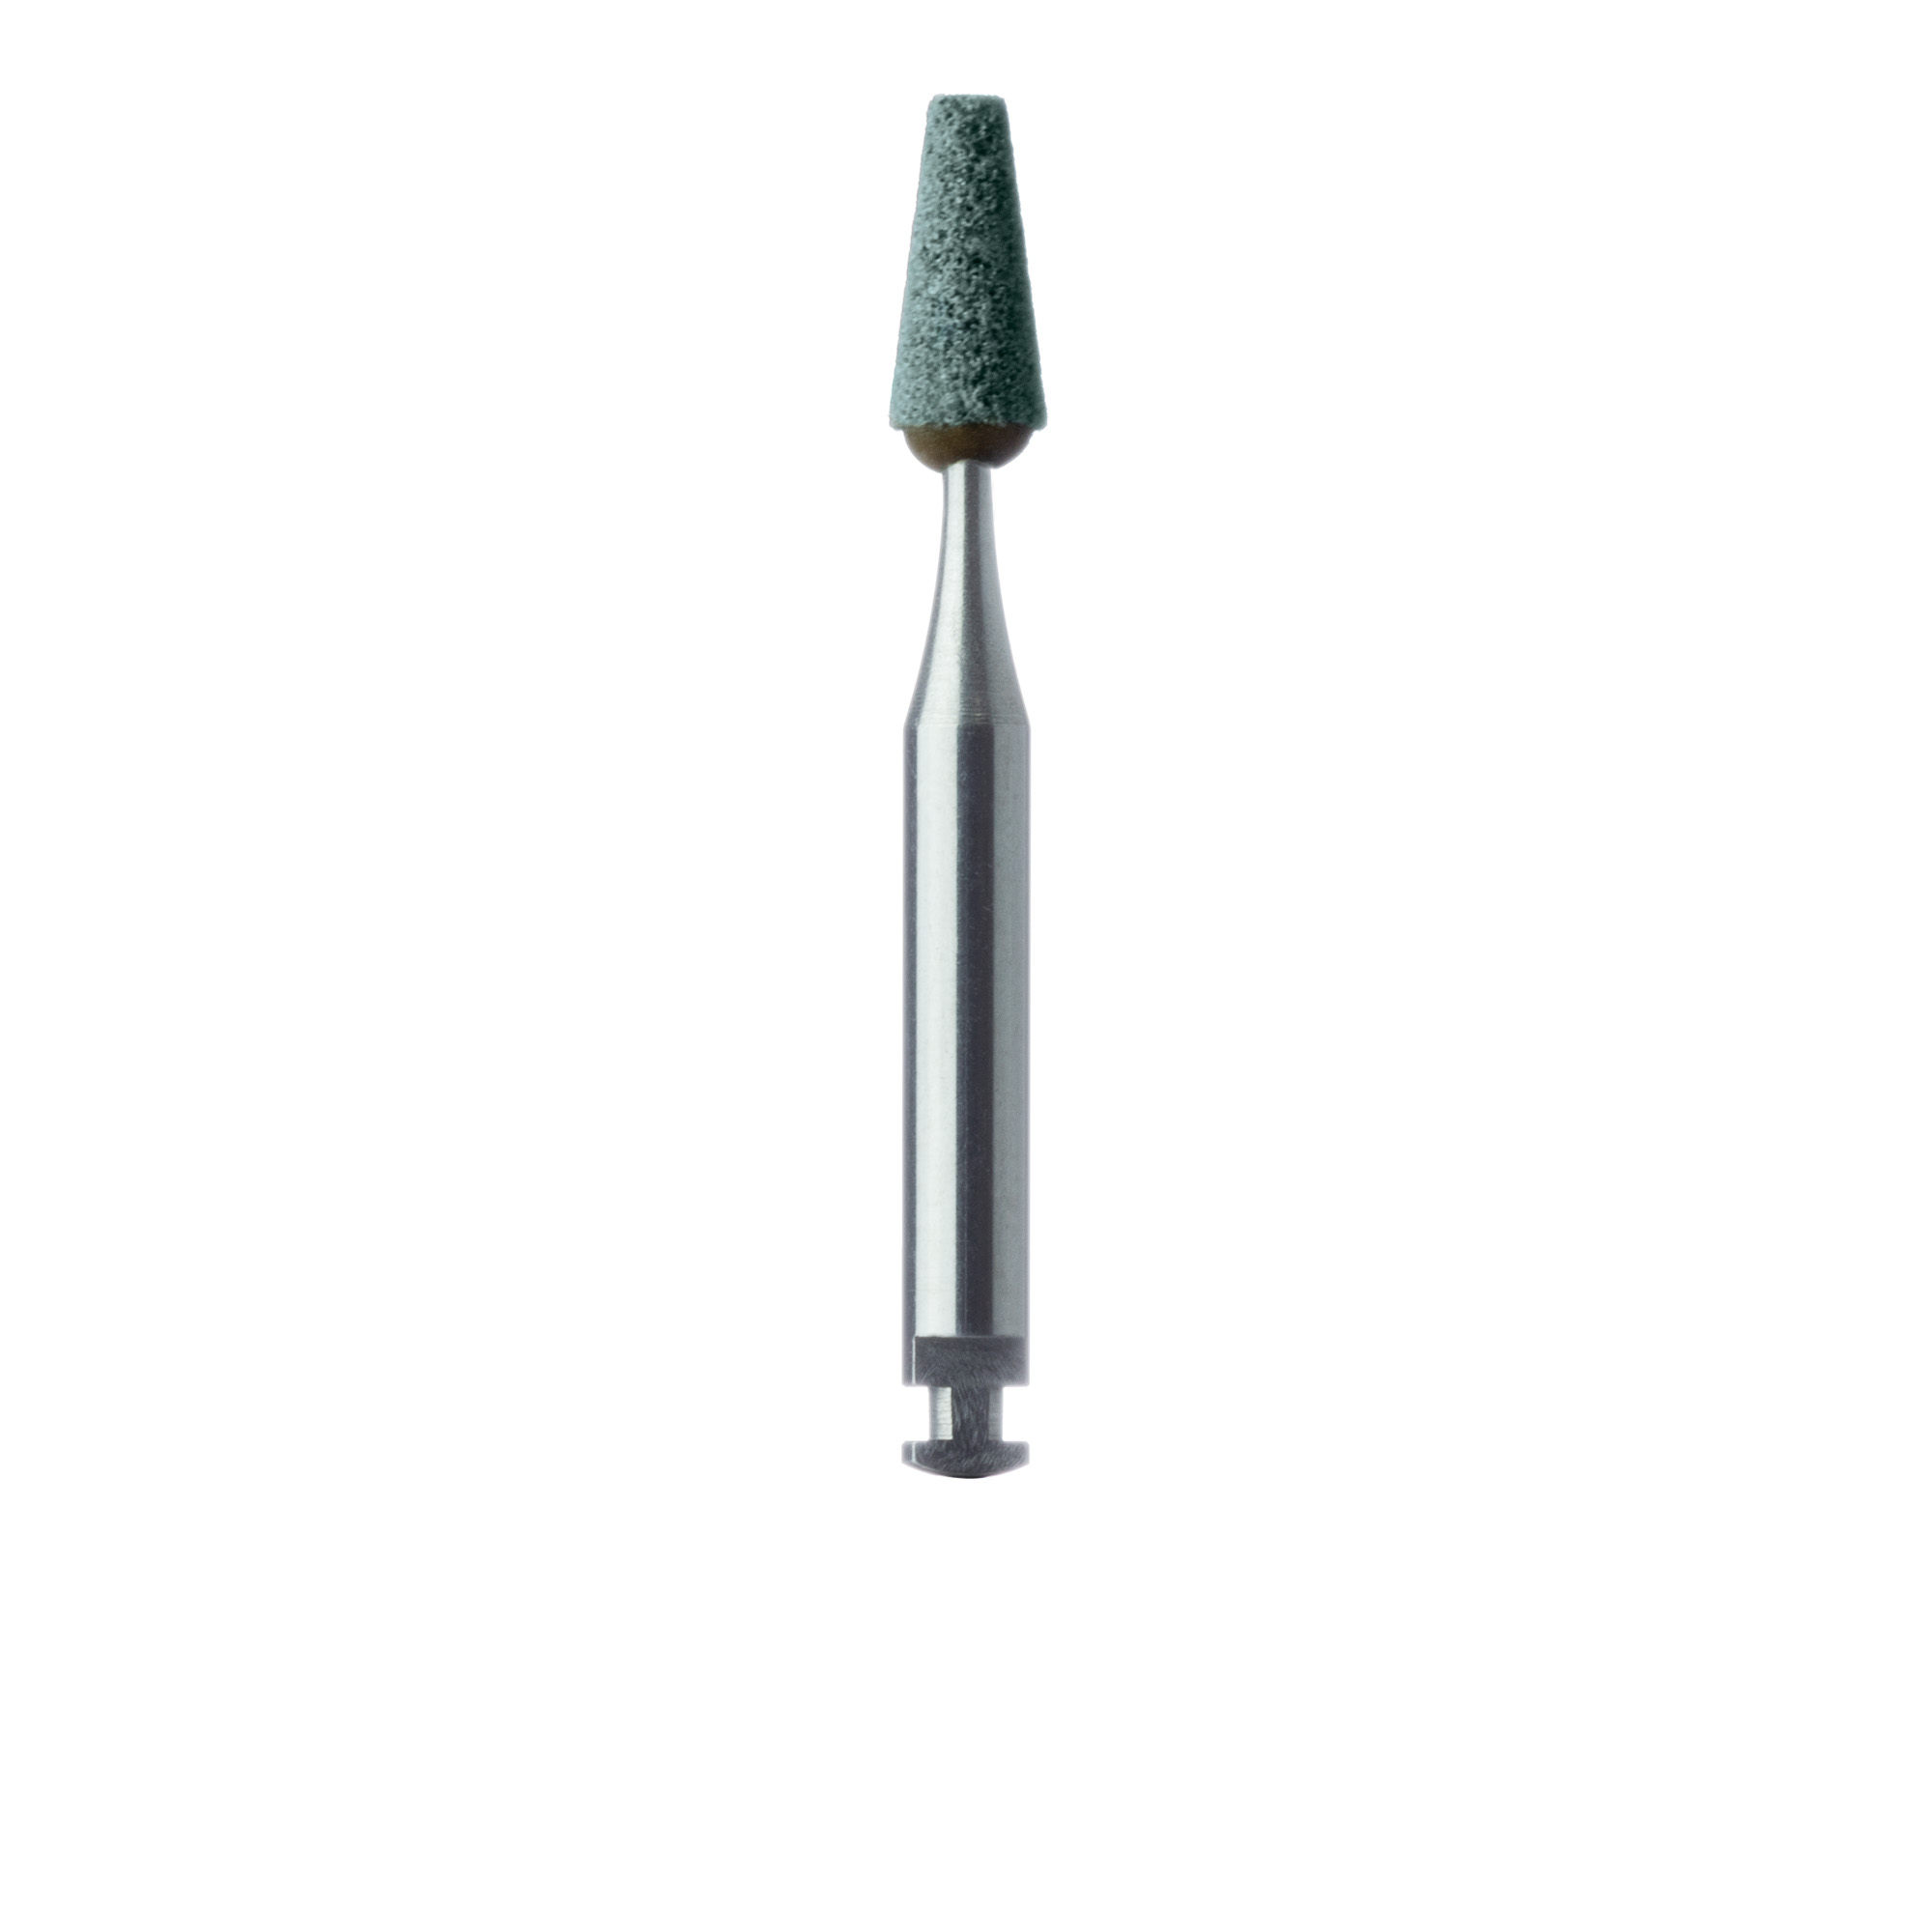 650-028-RA-GRN Abrasive, Green, Tapered Flat End, 2.8mm Ø, Medium, RA